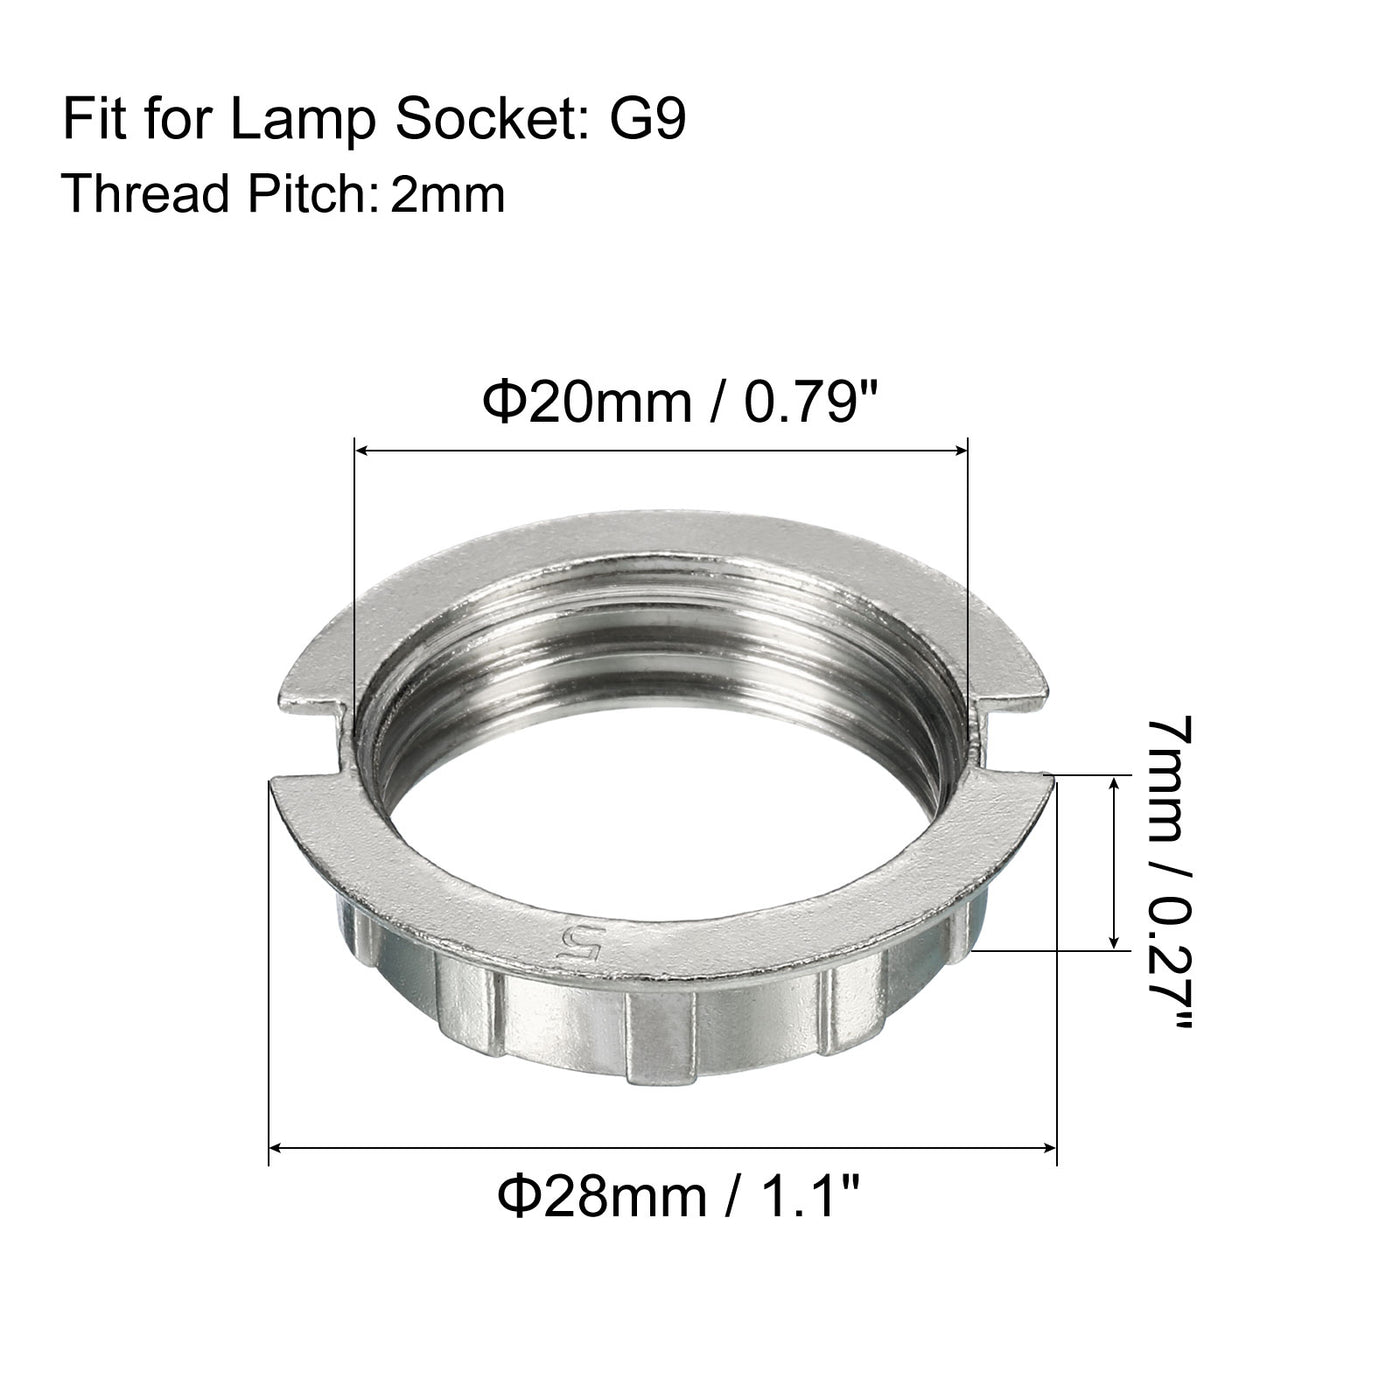 Harfington Light Socket Rings Lamp Shade Holder Adapter Ring Zinc Alloy for Light Fixtures, Pack of